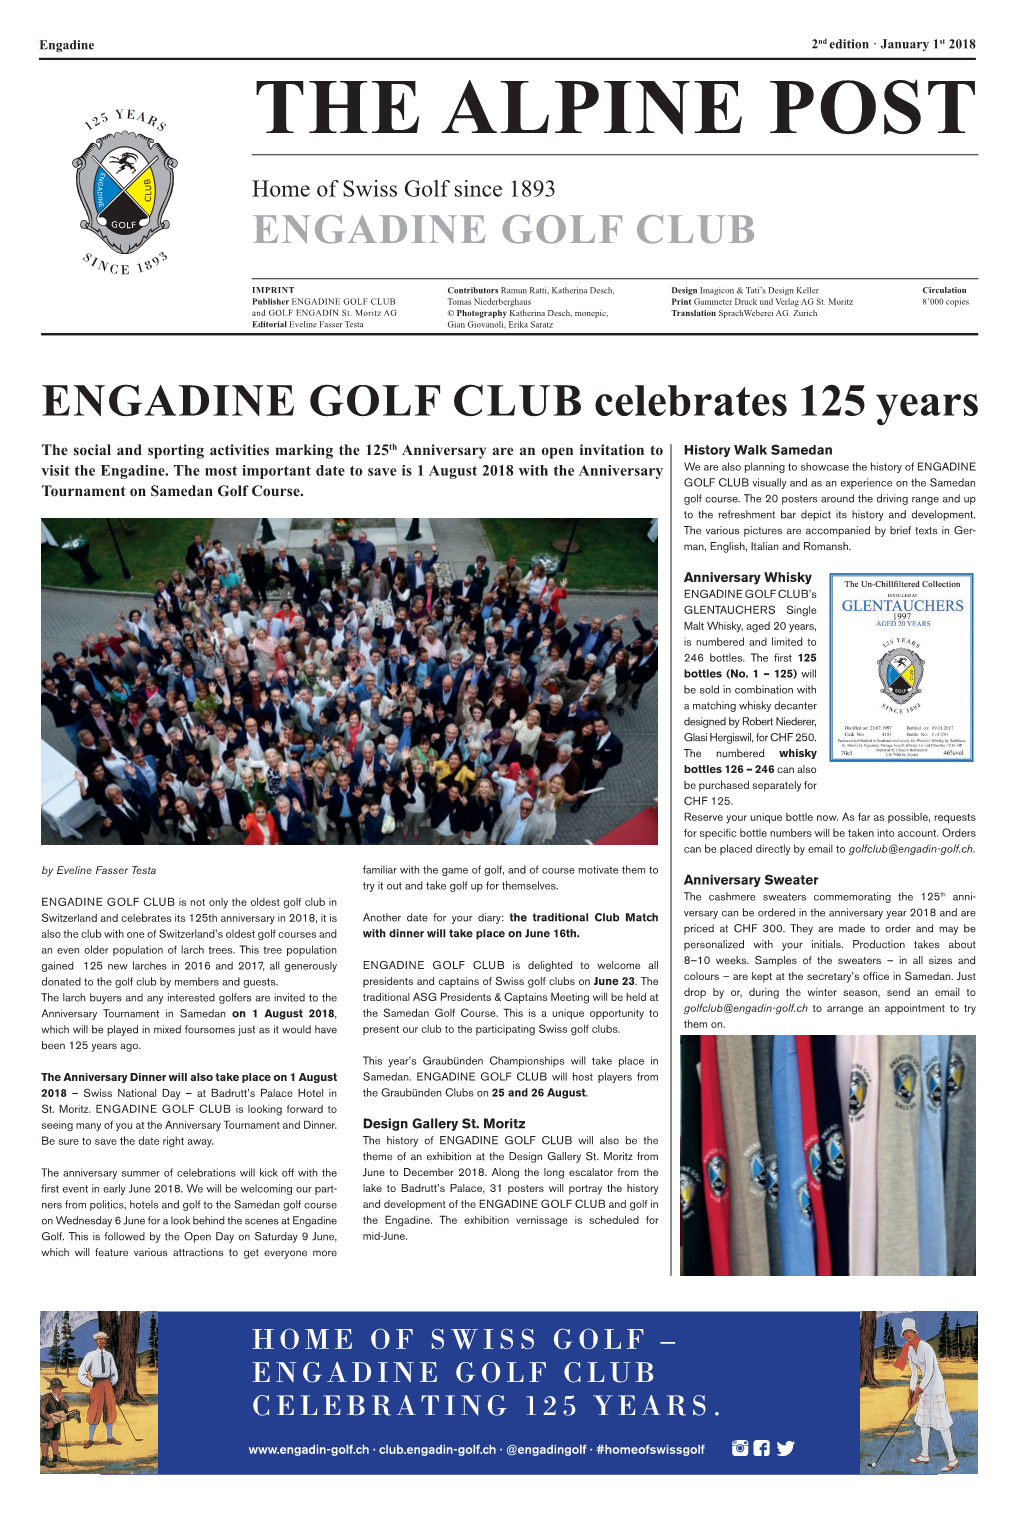 ENGADINE GOLF CLUB Celebrates 125 Years